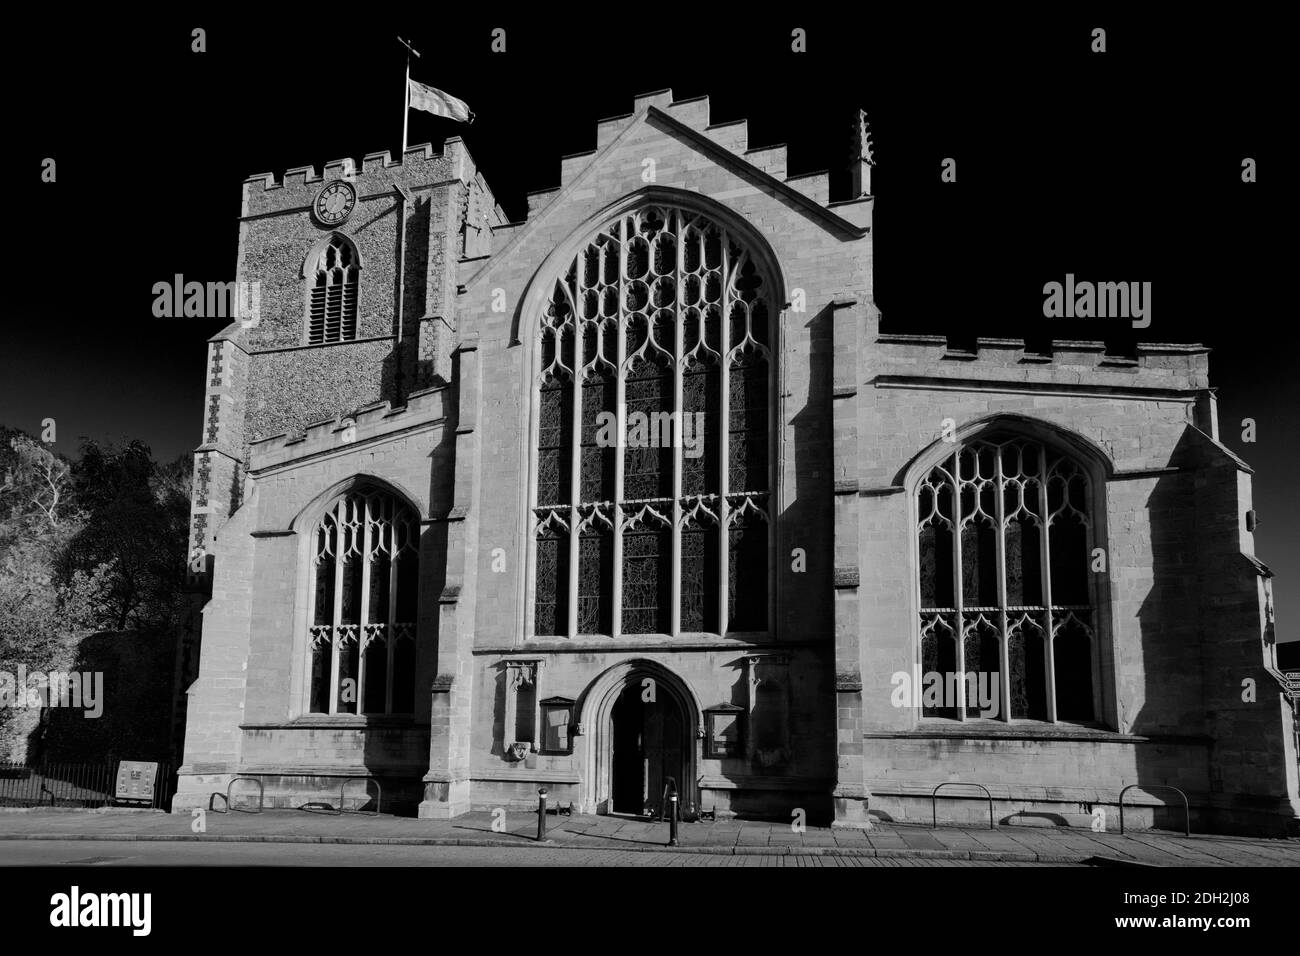 St Marys Church, Bury St Edmunds City, Suffolk County, England, UK Stock Photo